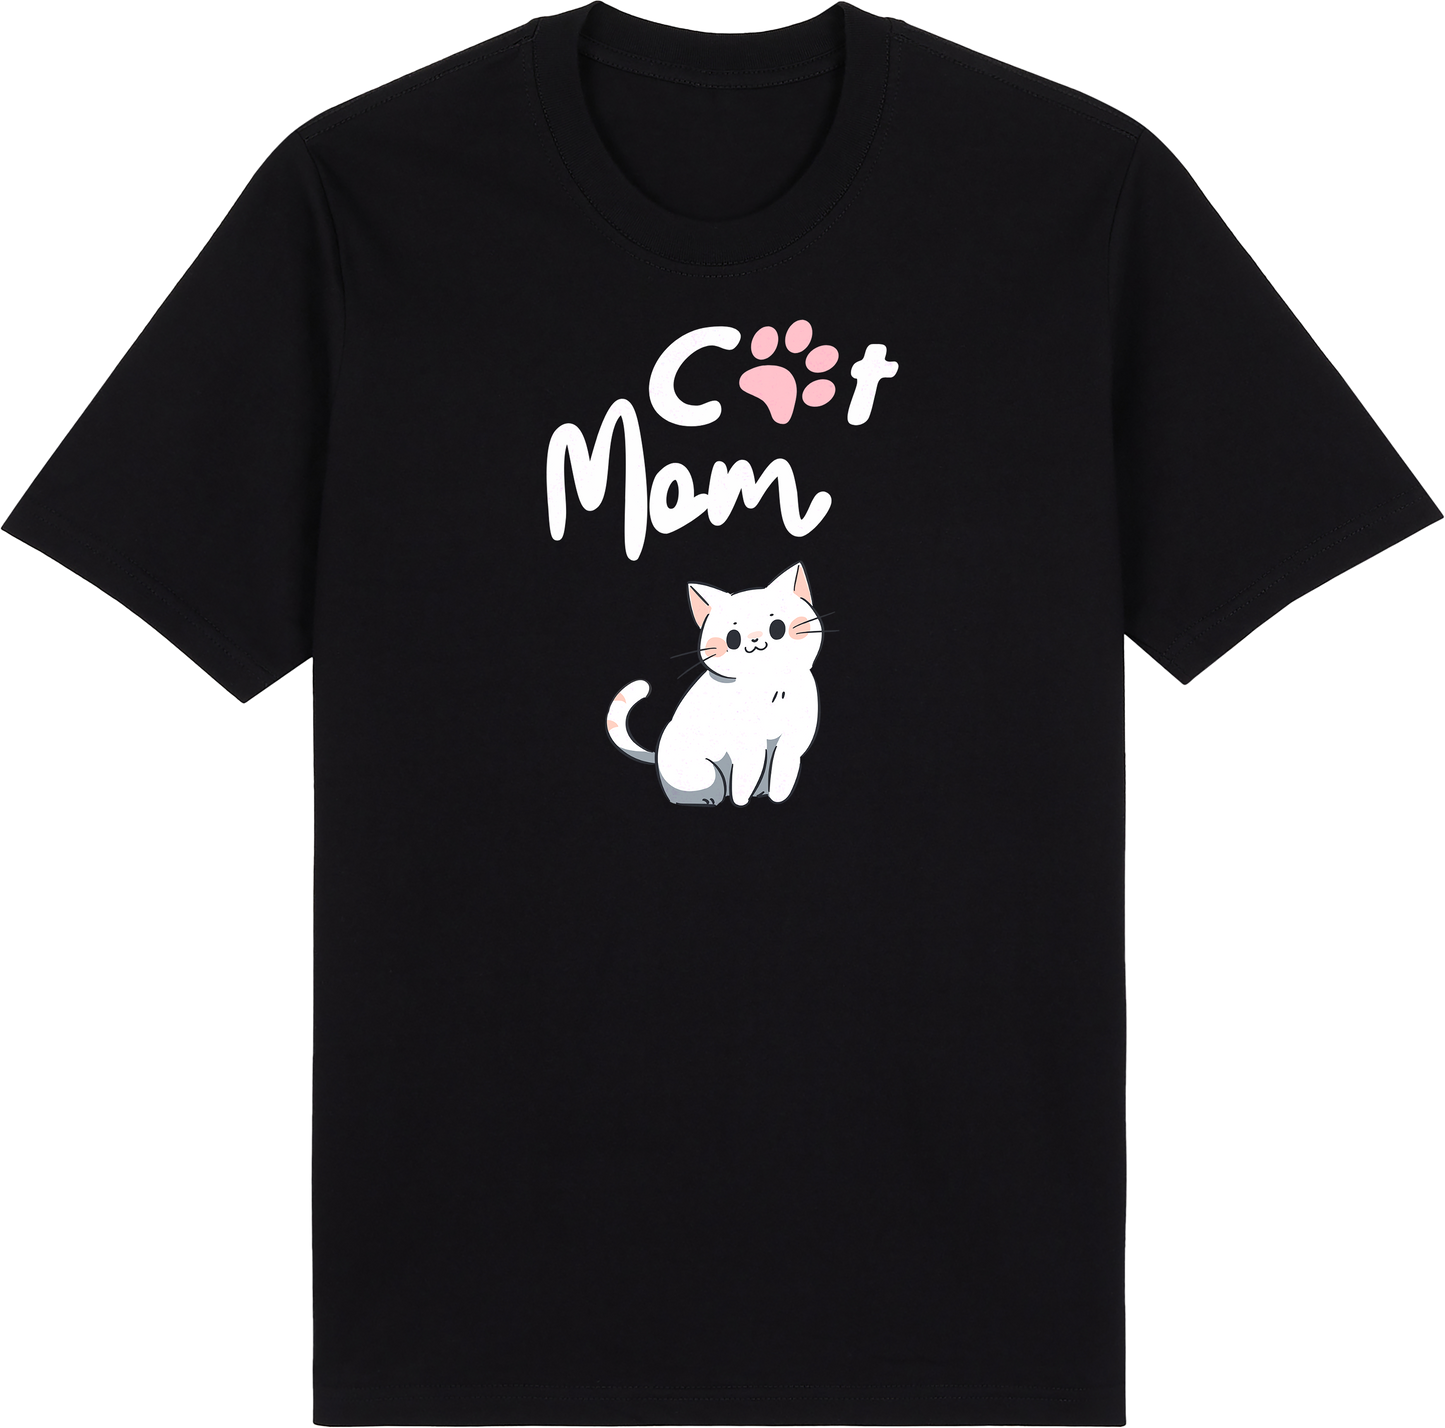 Cat Mom (white cat)